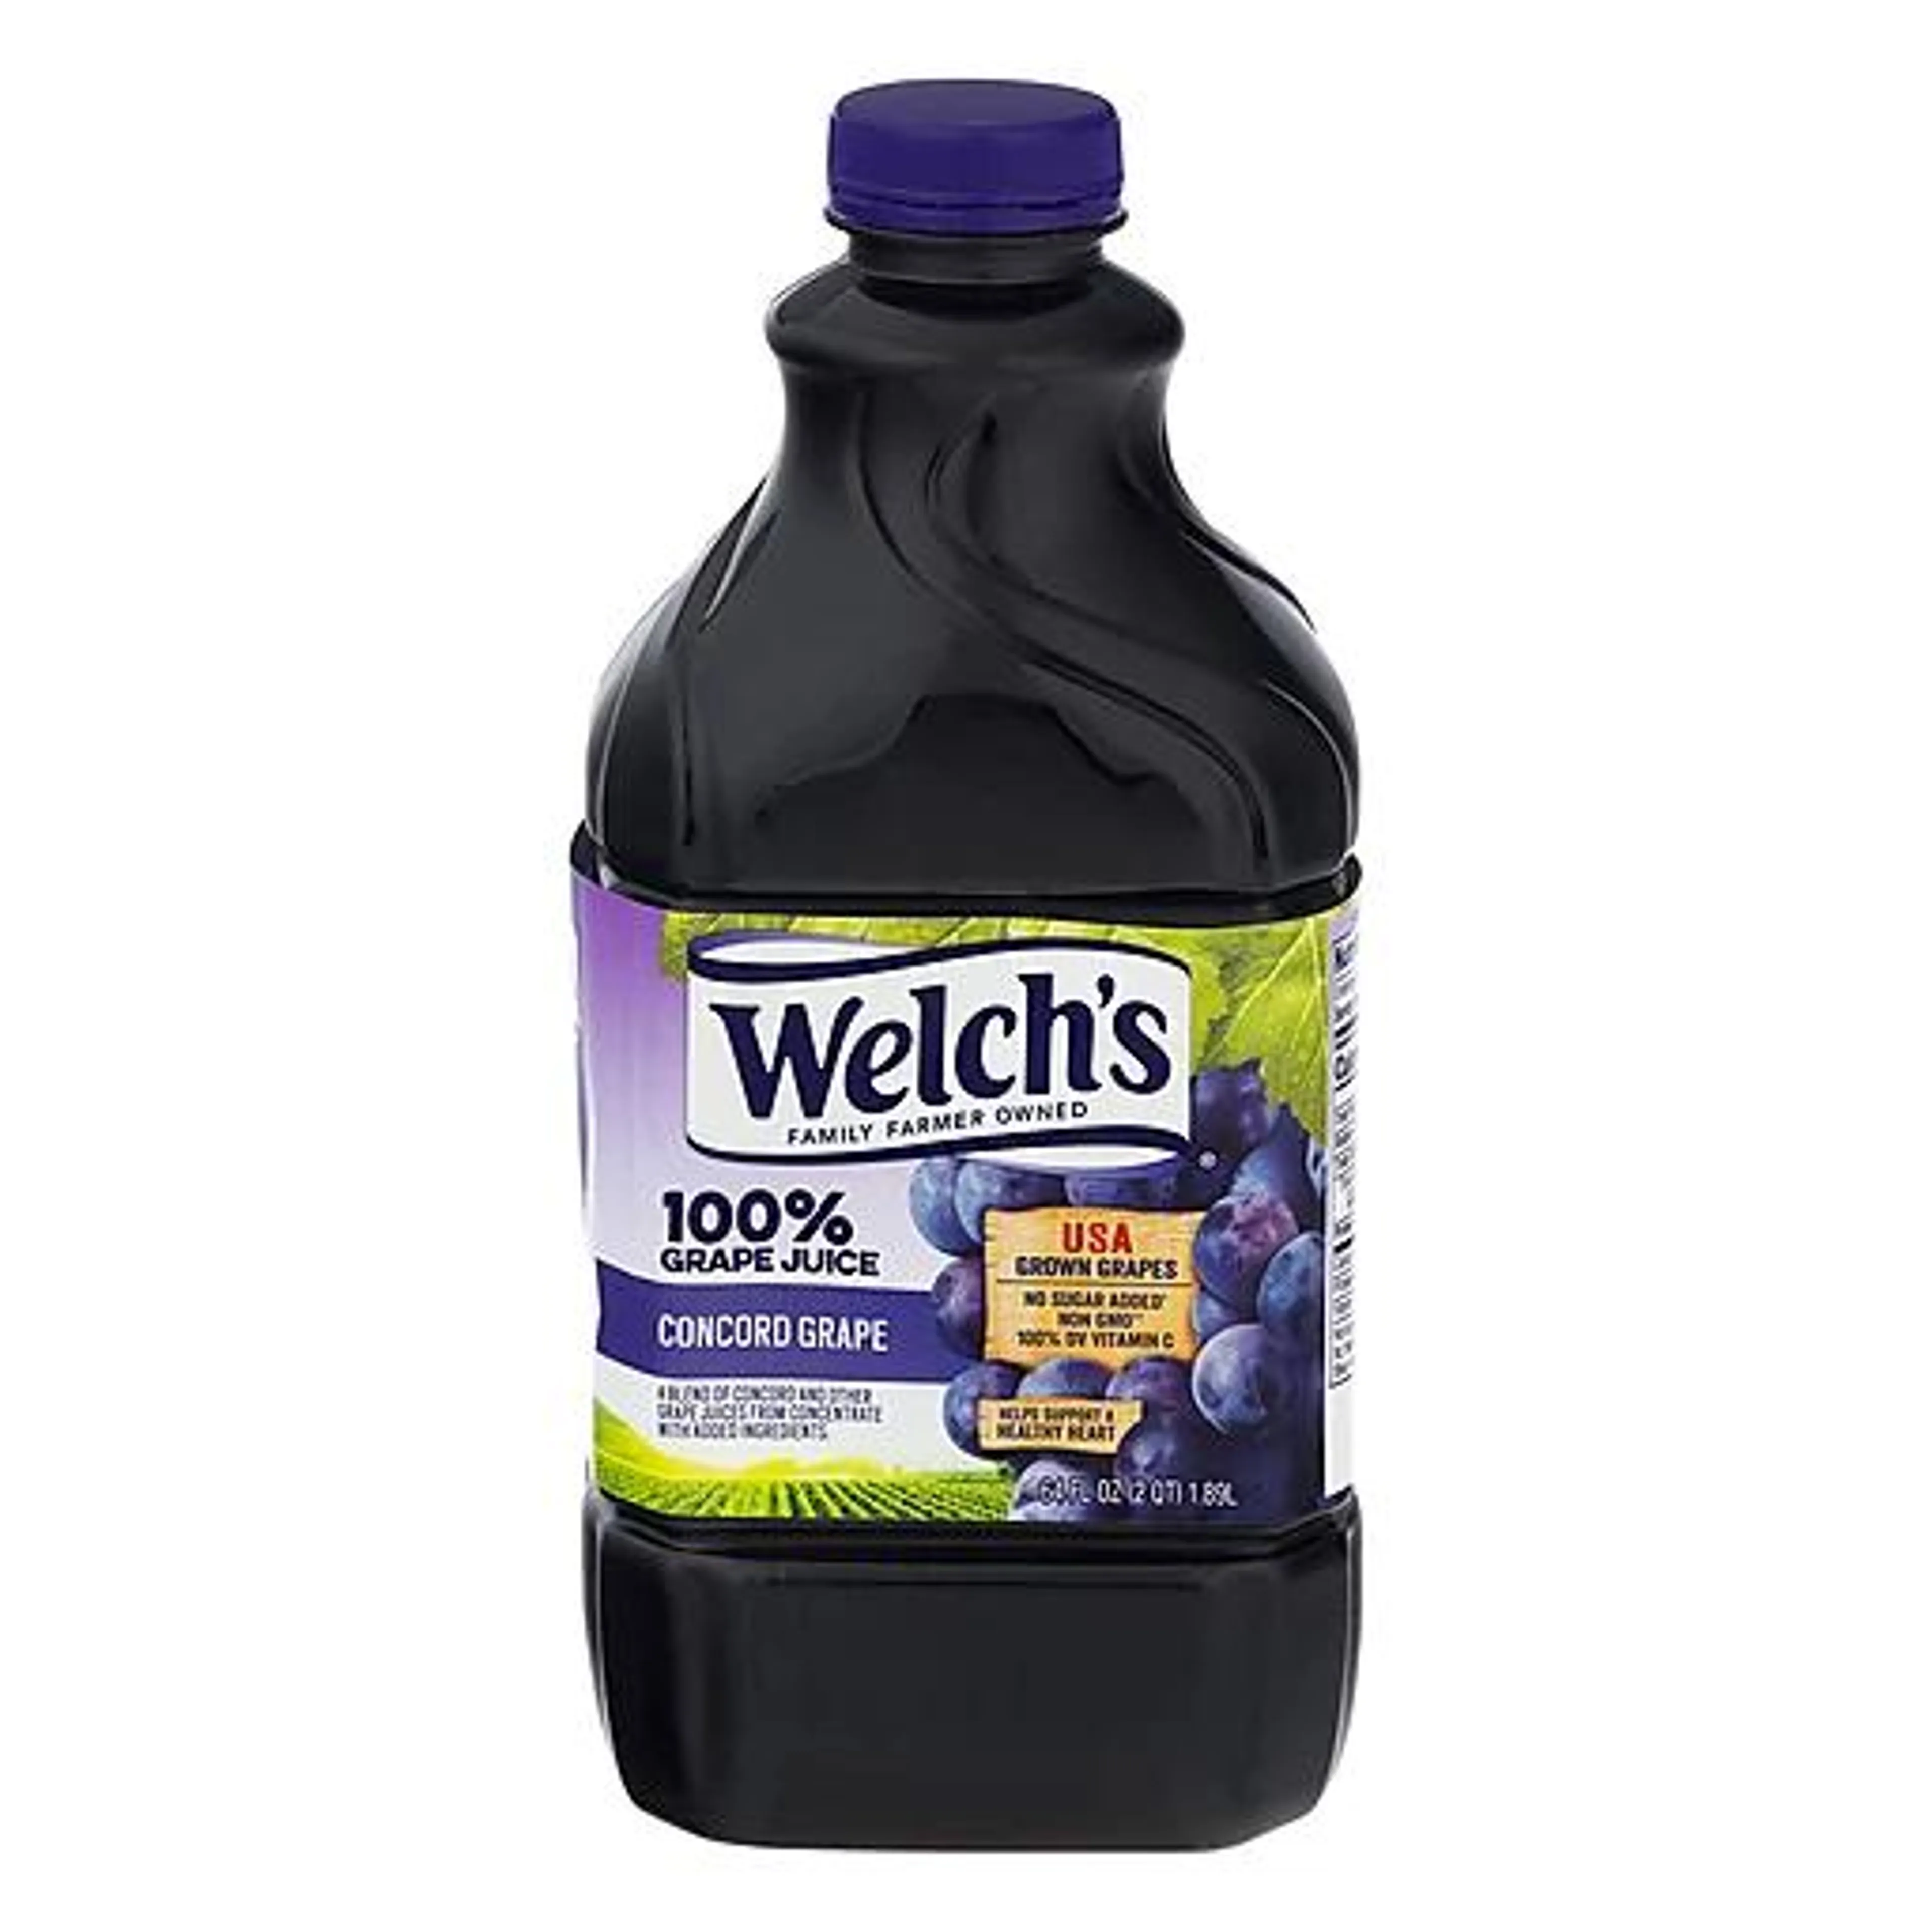 Welch's Concord Grape 100% Juice 64 Oz